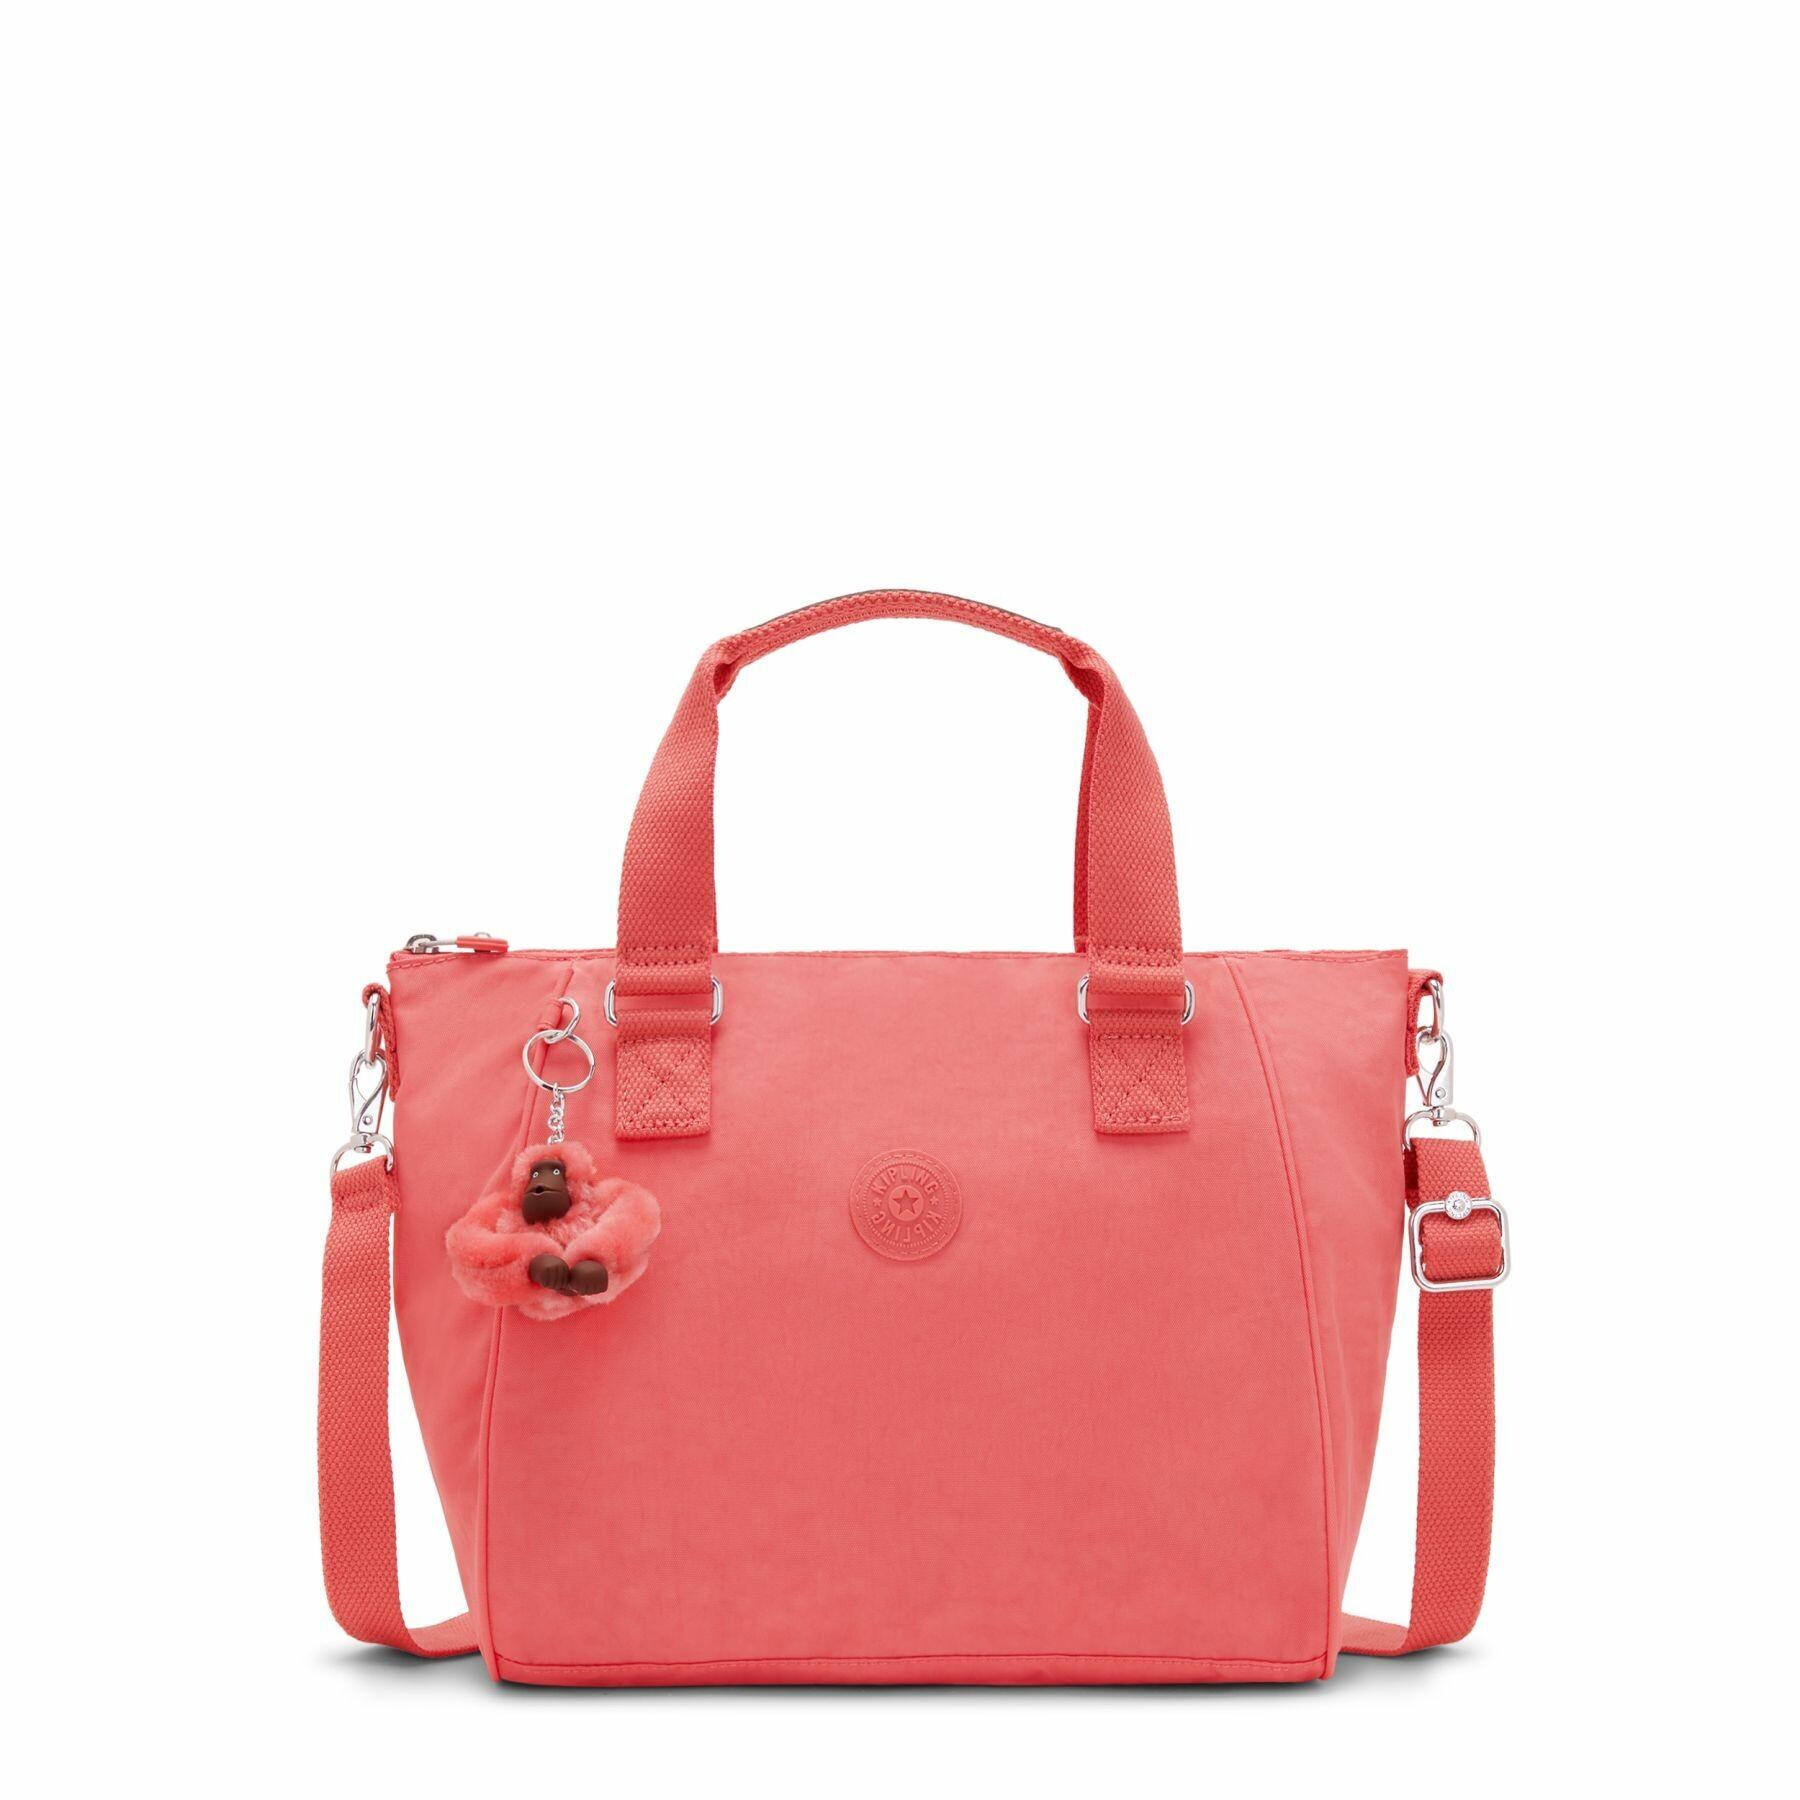 Women's handbag Kipling Amiel